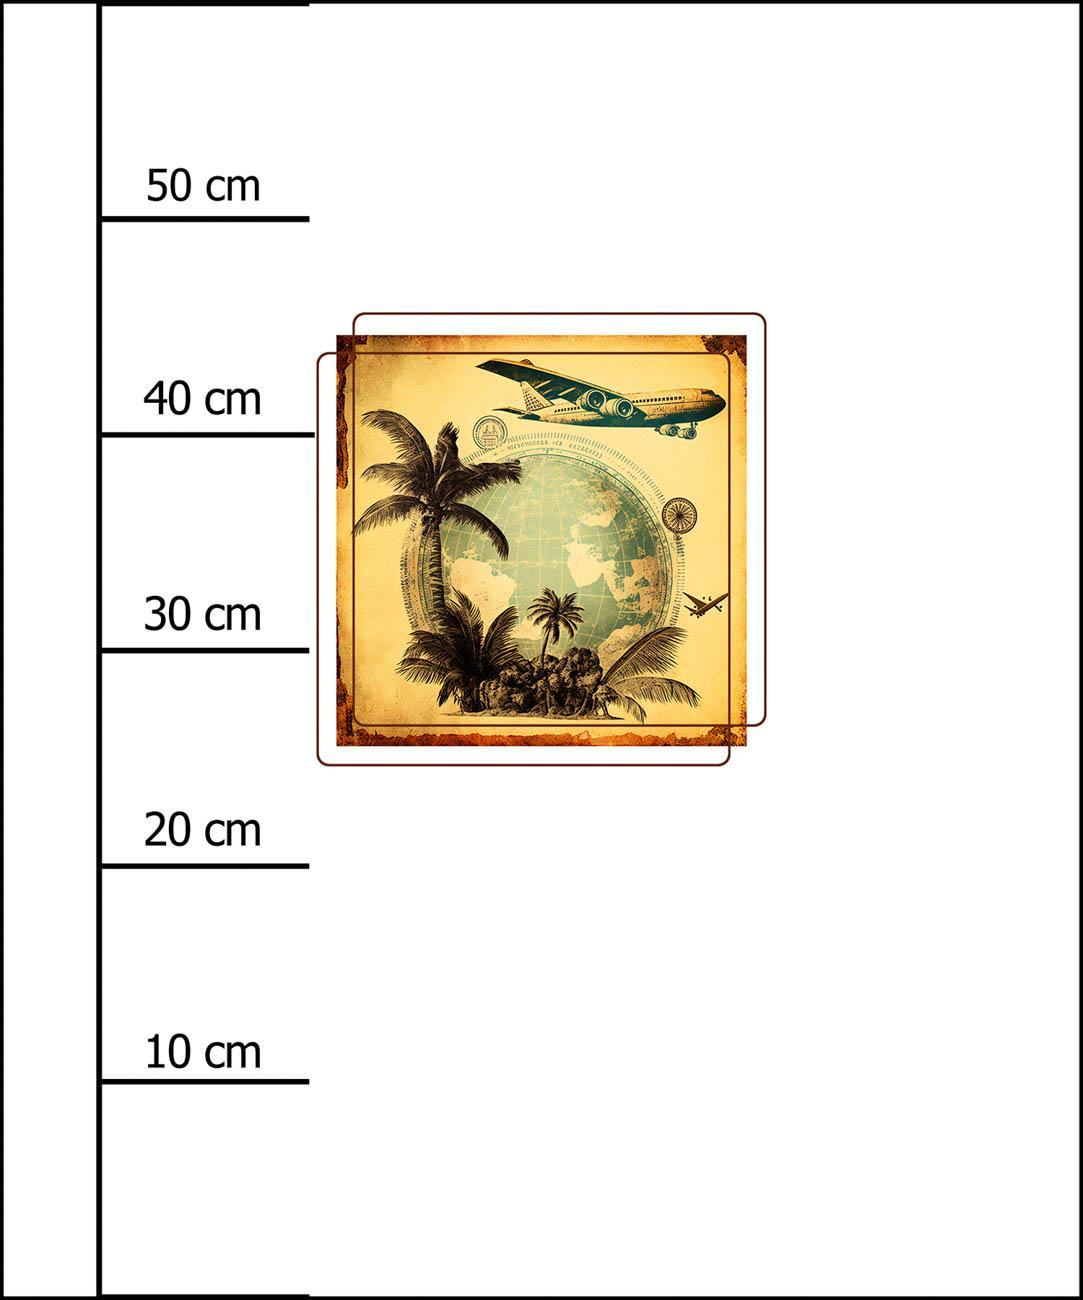 TRAVEL TIME PAT. 7 - PANEL (60cm x 50cm) SINGLE JERSEY